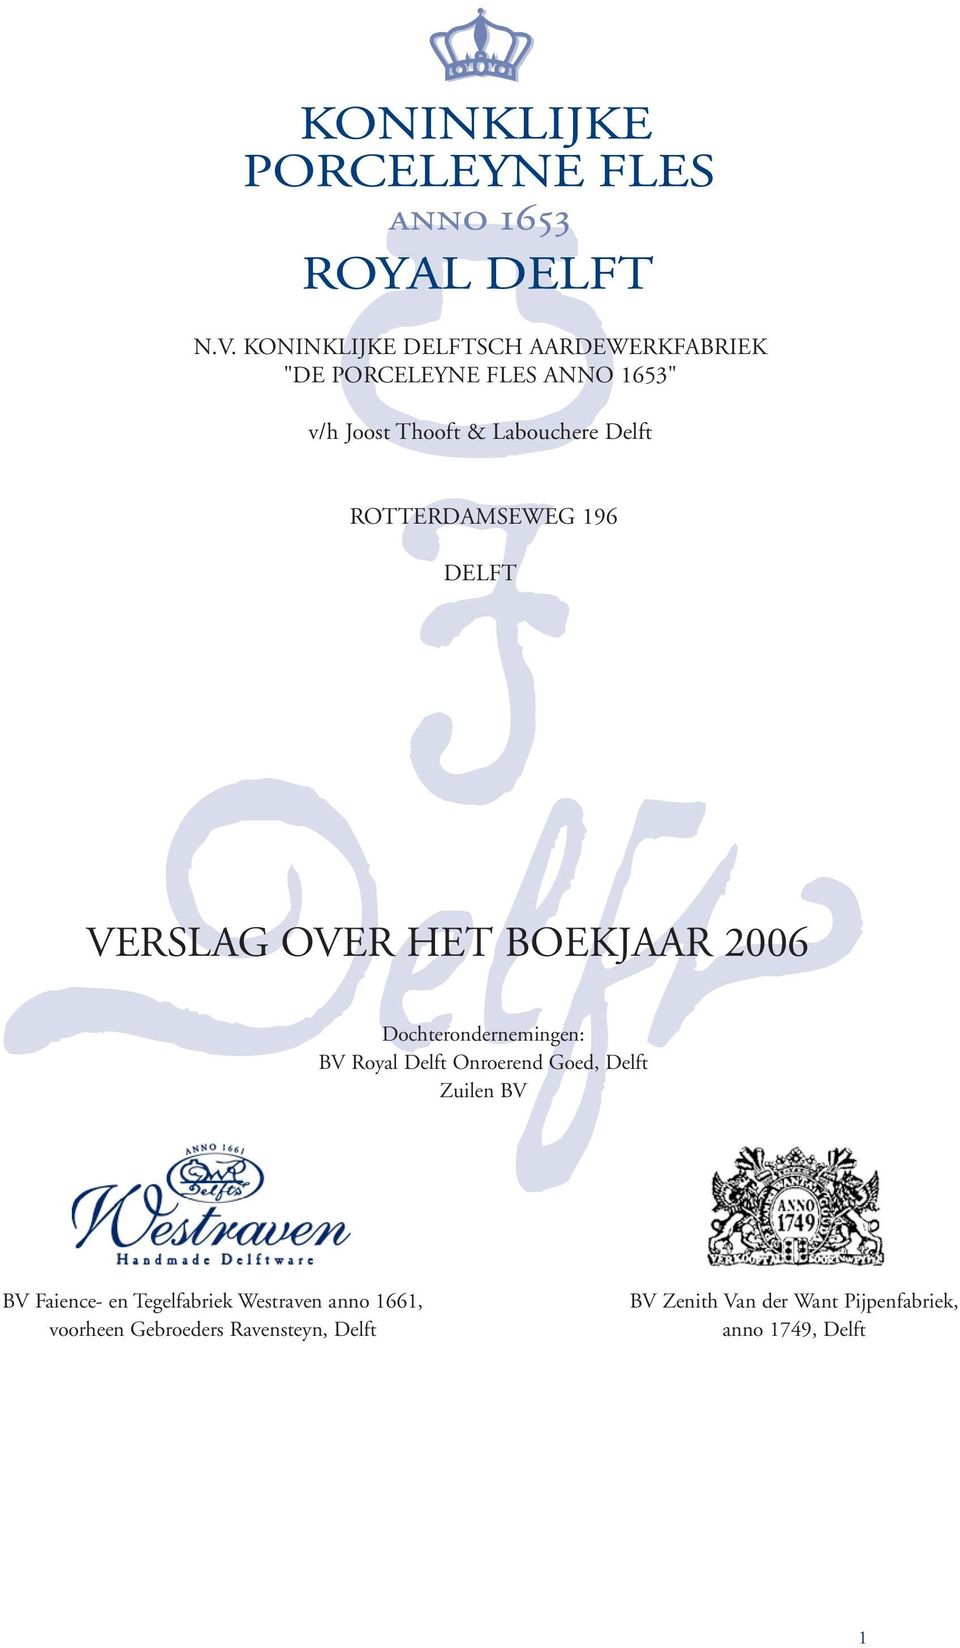 BV Royal Delft Onroerend Goed, Delft Zuilen BV BV Faience- en Tegelfabriek Westraven anno